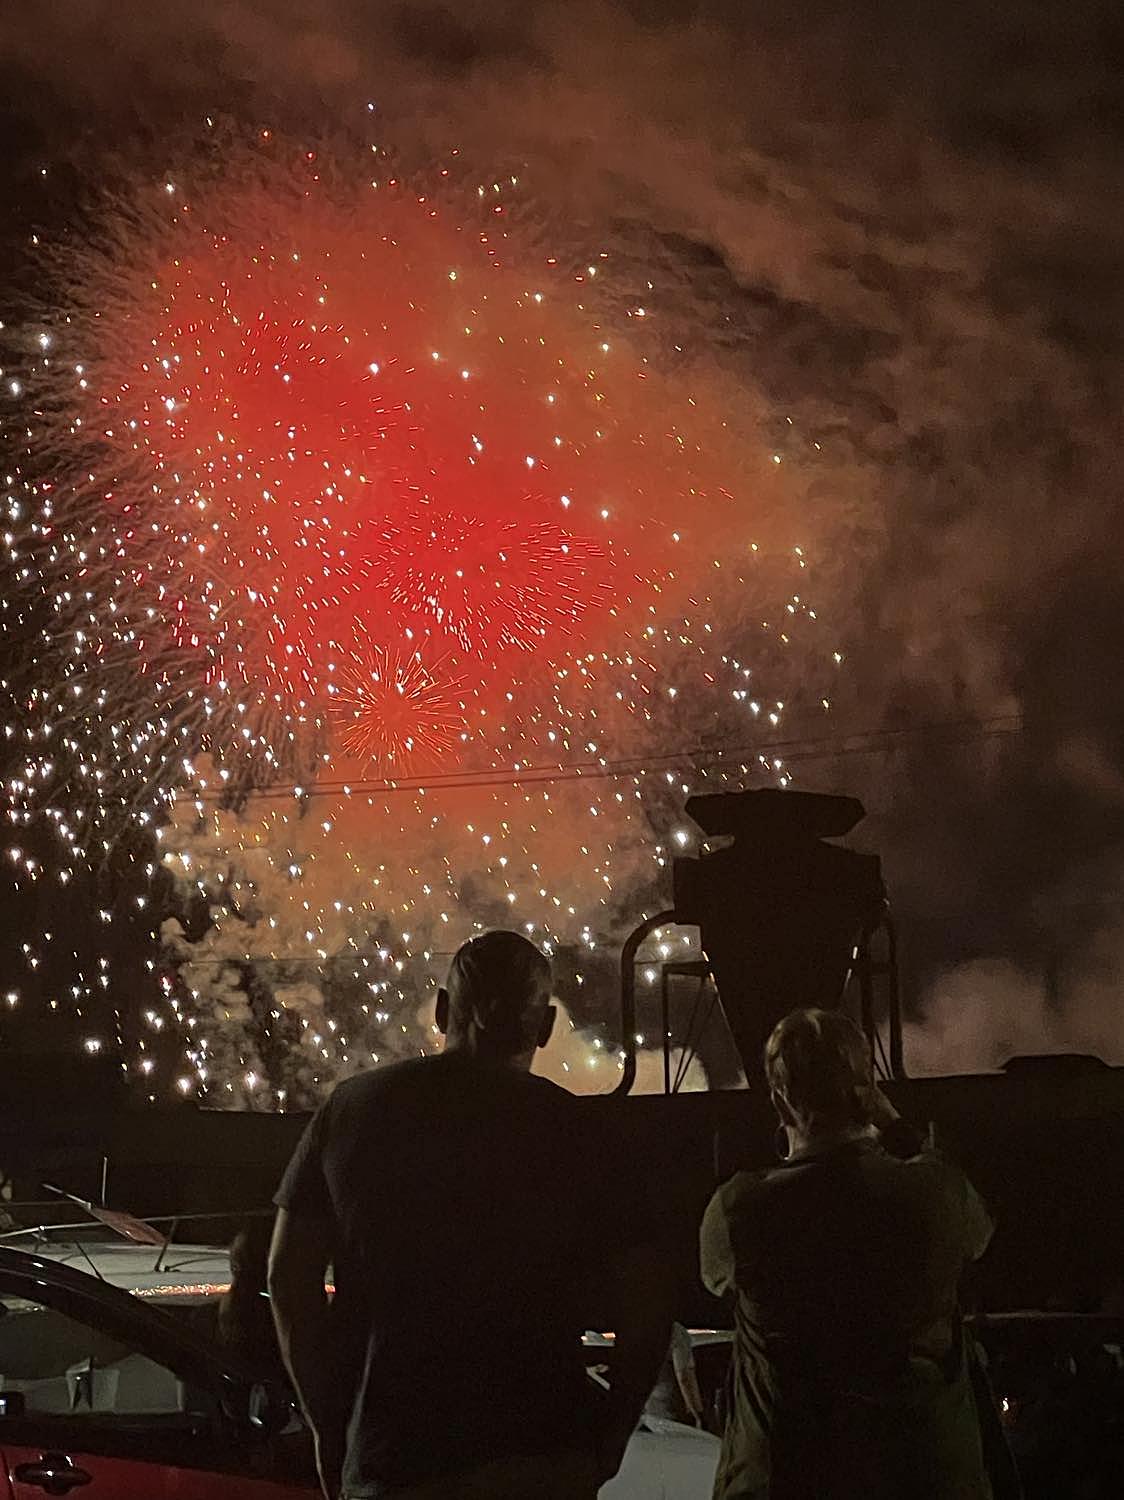 McCoy Stadium Fireworks Mark End of Era for Beloved Ballpark